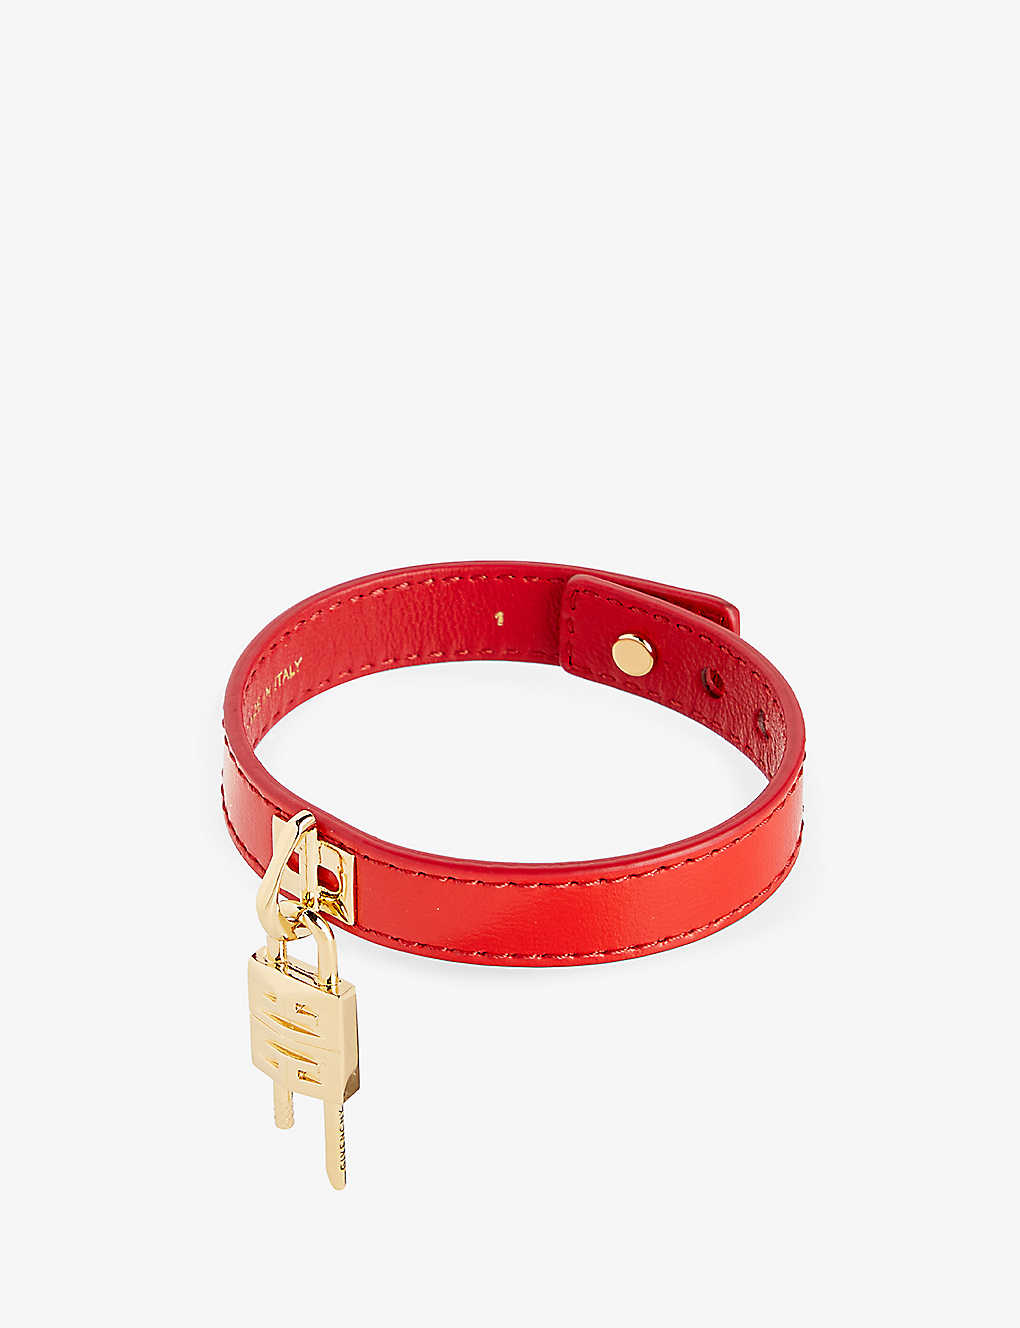 Givenchy Womens Golden Red Padlock-charm Adjustable Leather Bracelet